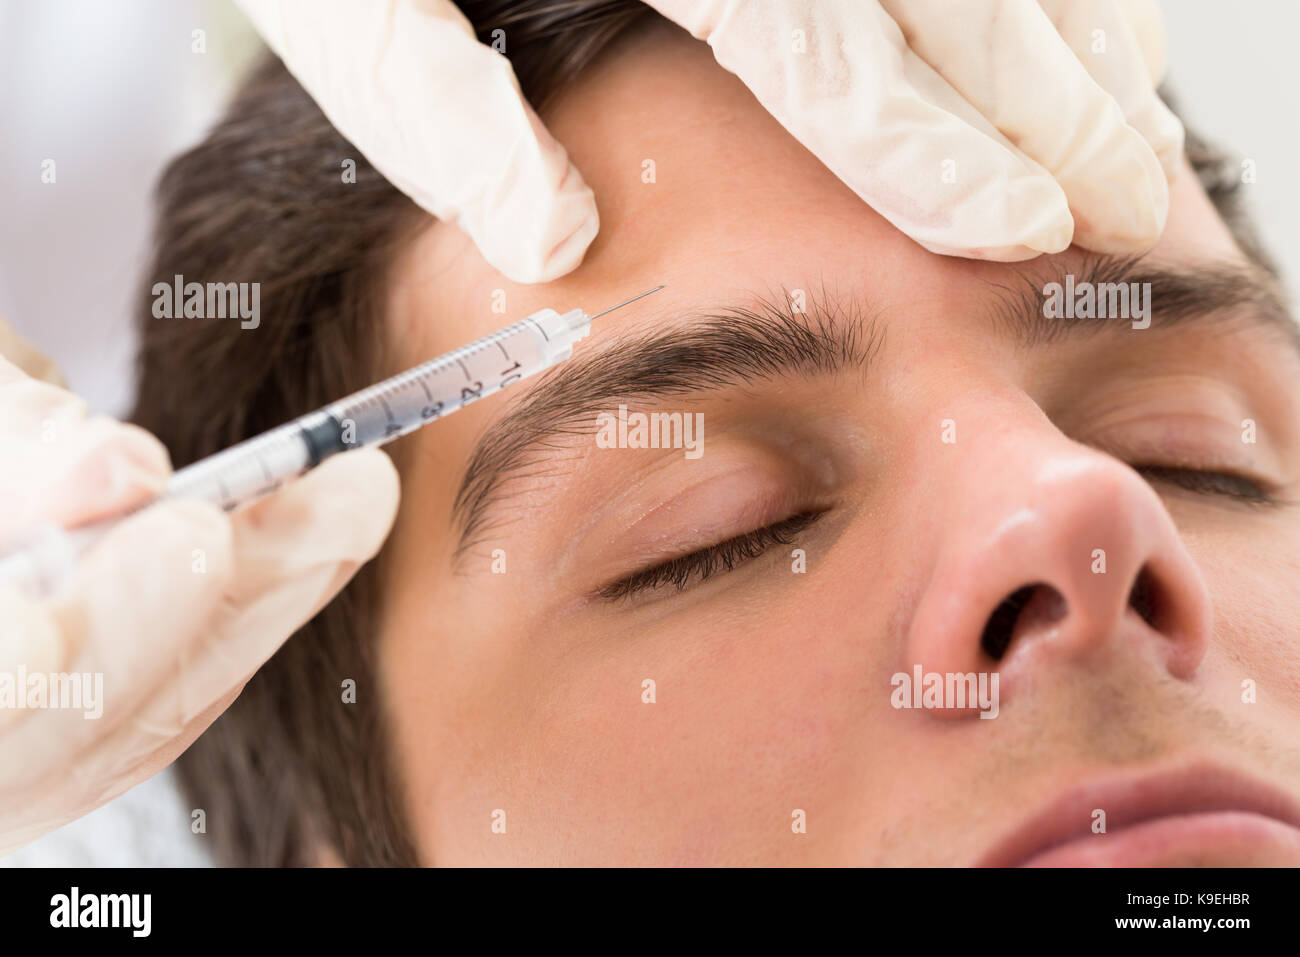 Young Man Having Botox Treatment At Beauty Clinic Stock Photo